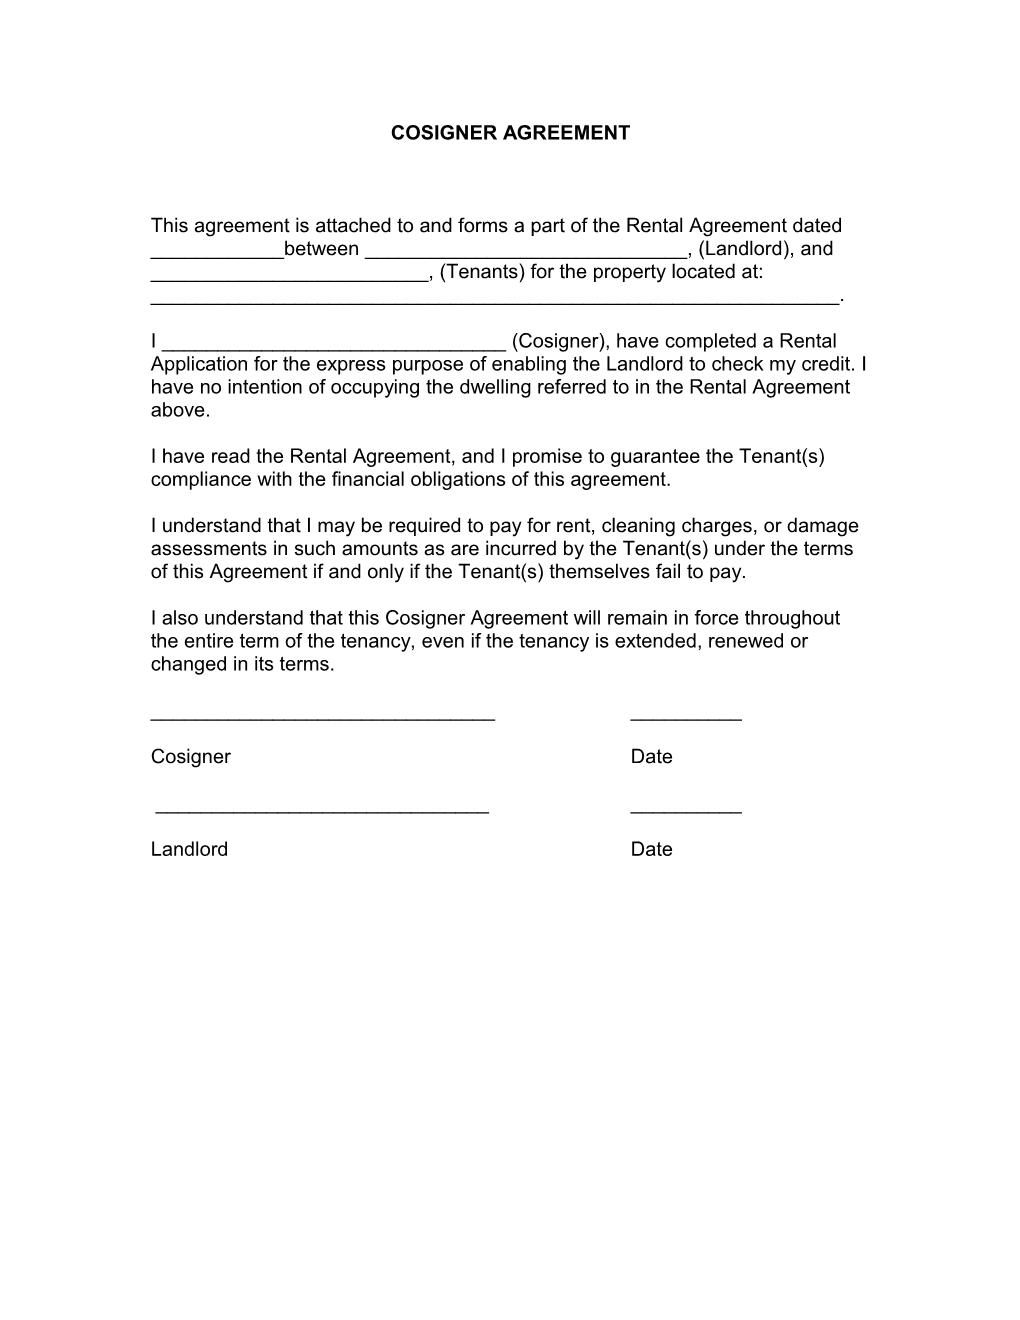 Cosigner Agreement